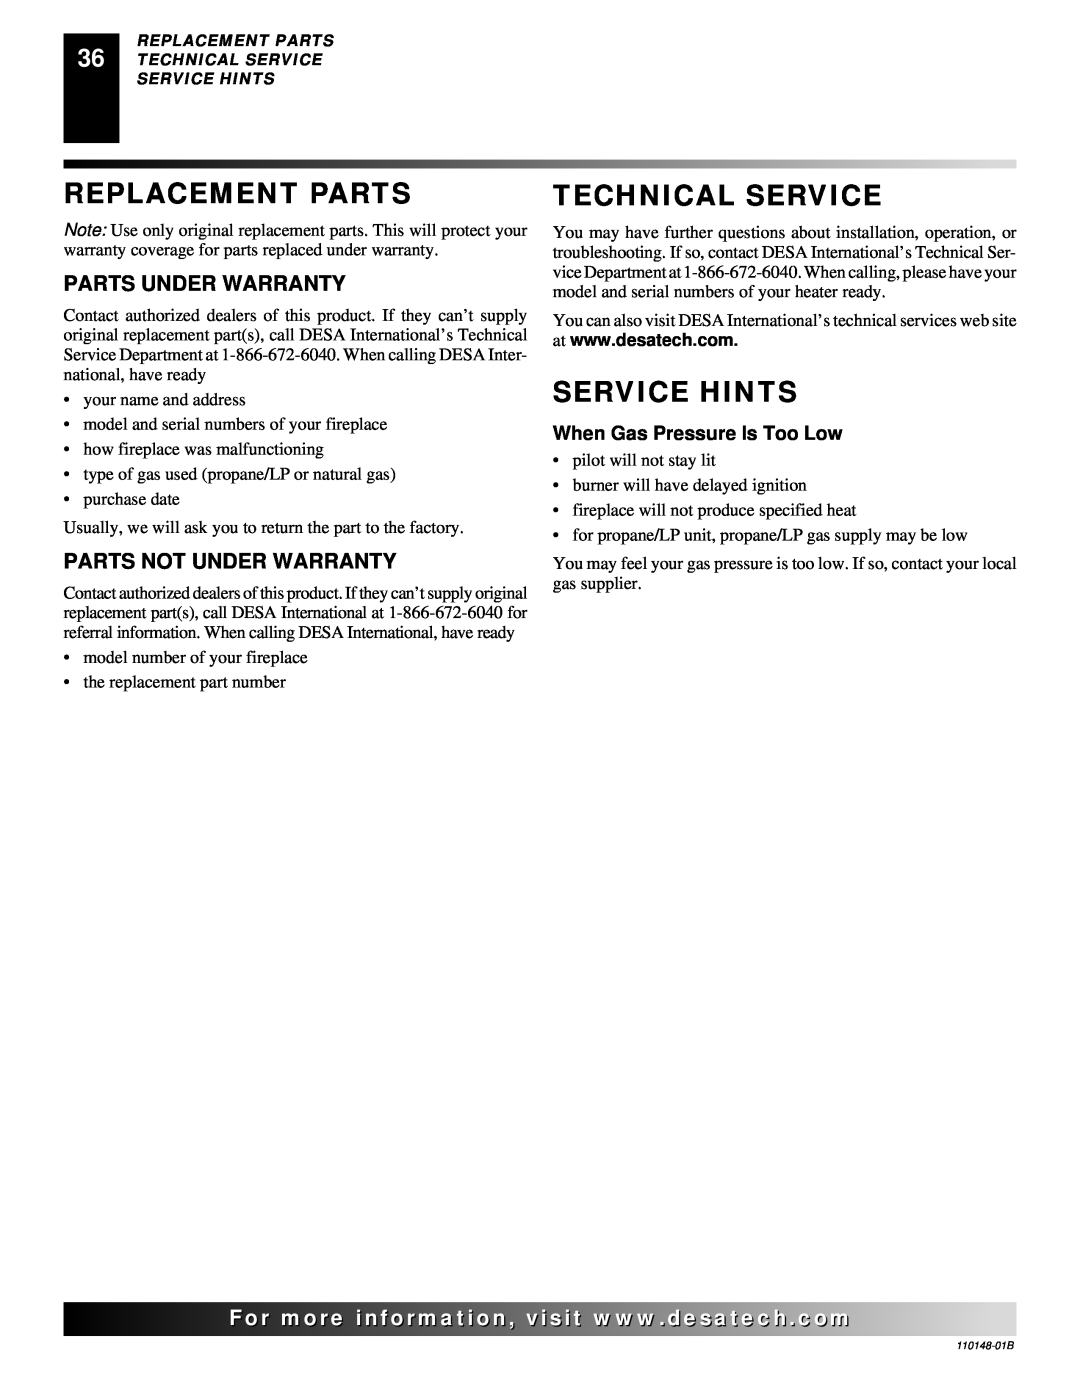 Desa YGF33PRB Replacement Parts, Technical Service, Service Hints, Parts Under Warranty, Parts Not Under Warranty 